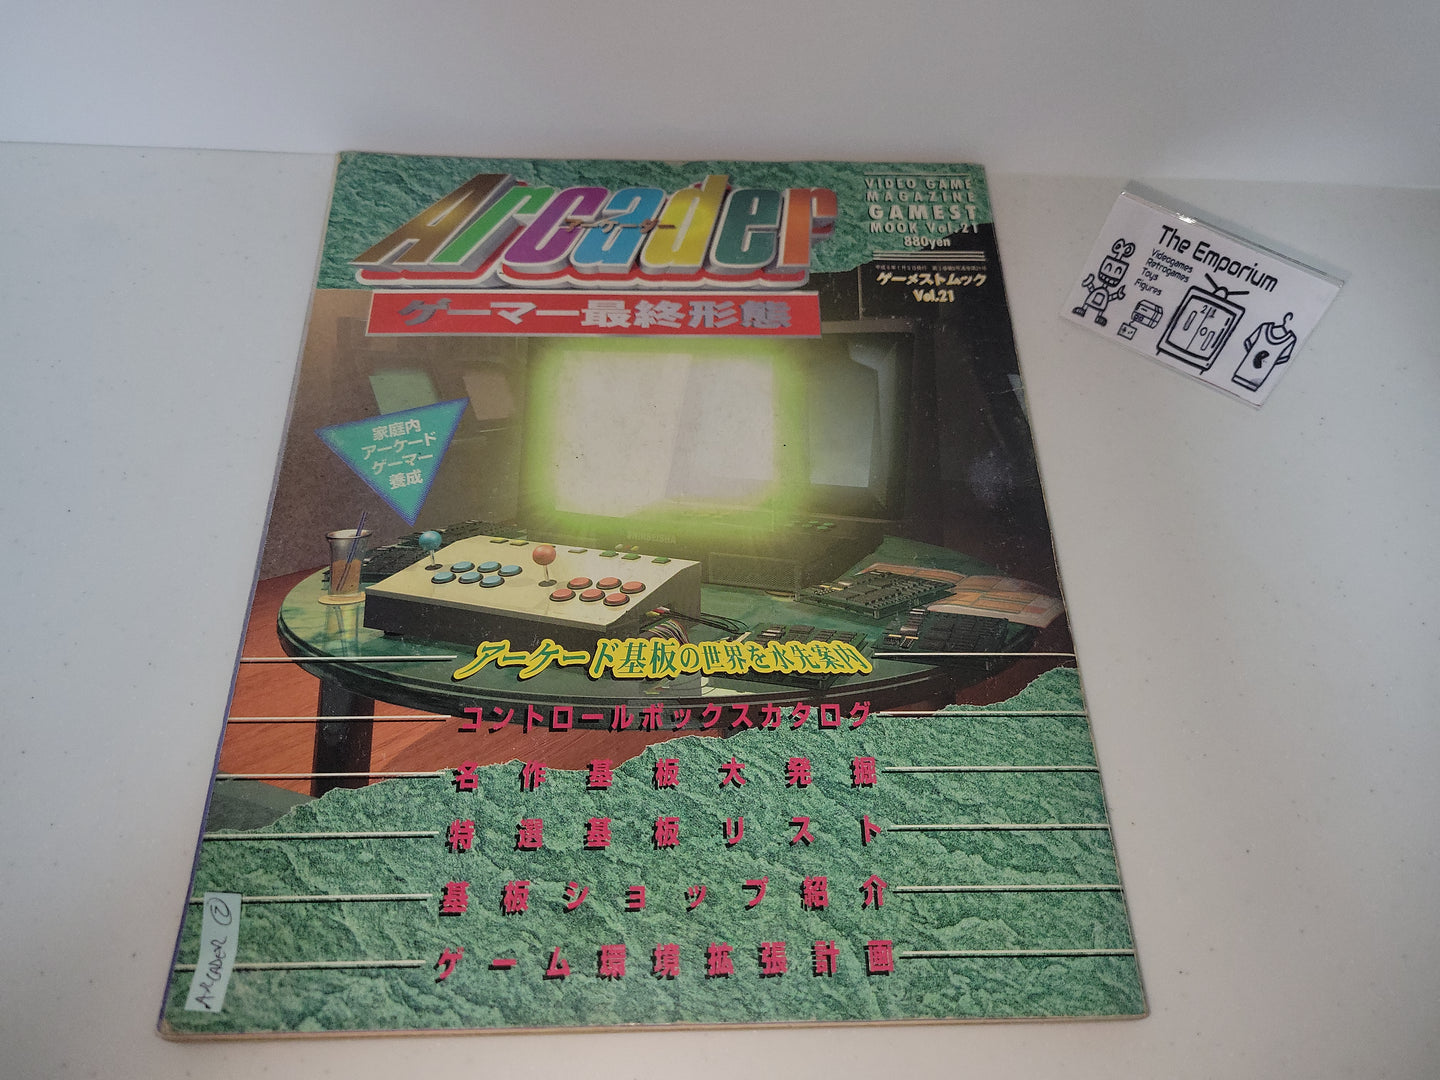 Anime Mook Gamer Arcader - World of Arcade Board Game Mook - PCB GUIDE MOOK